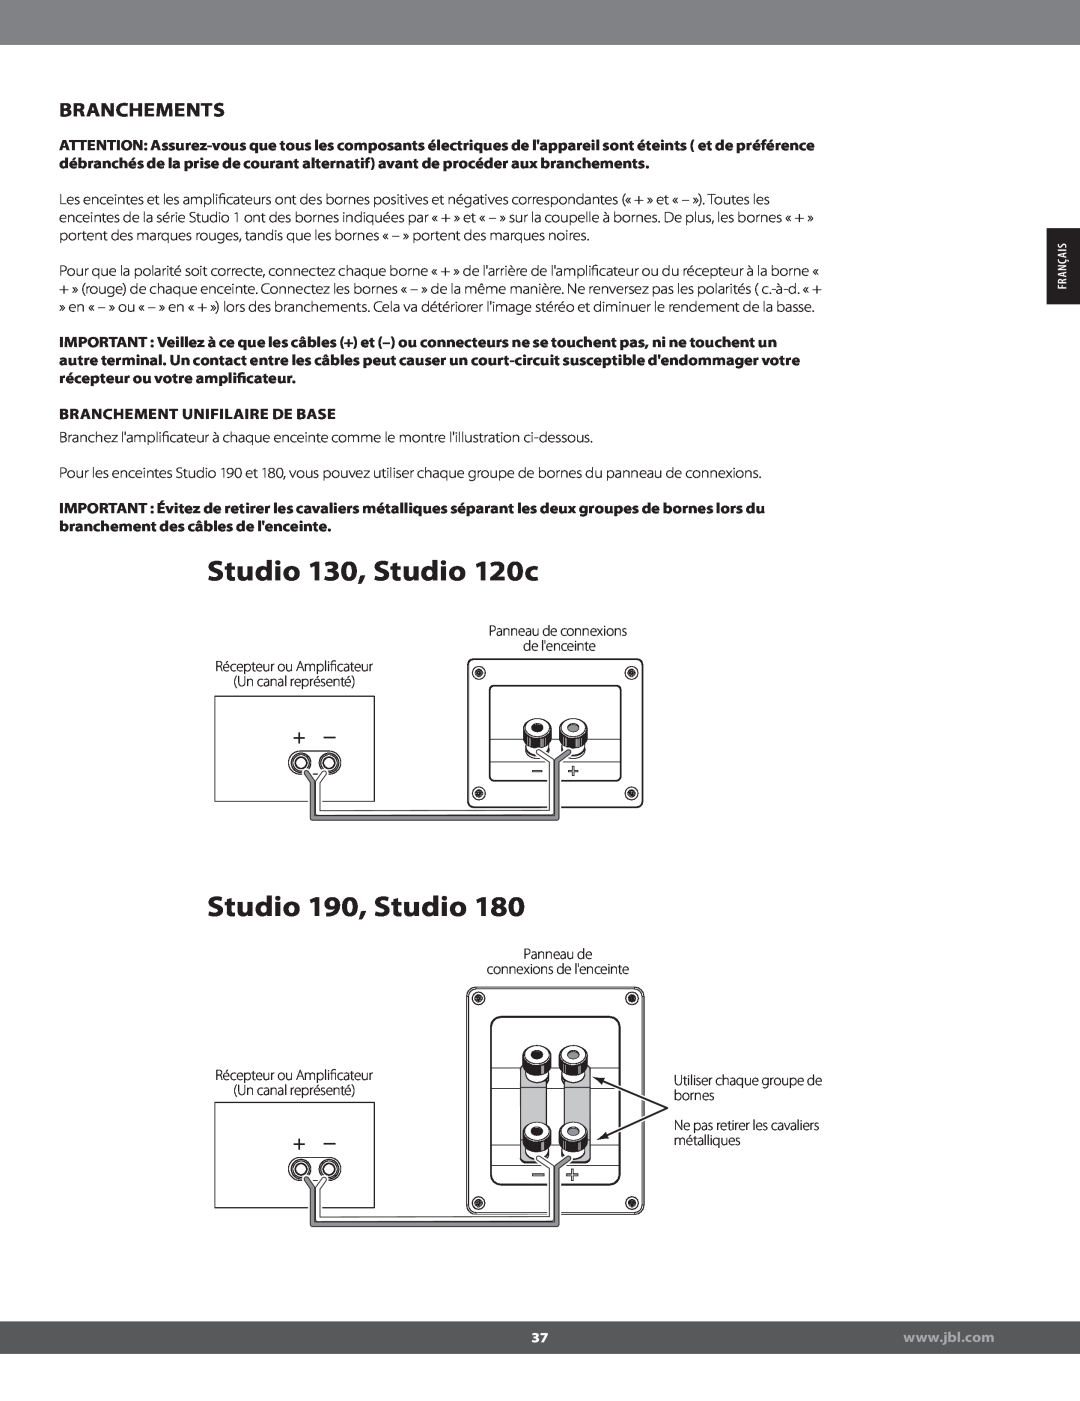 JBL STUDIO180 manual Branchements, Branchement Unifilaire De Base, Studio 130, Studio 120c, Studio 190, Studio 